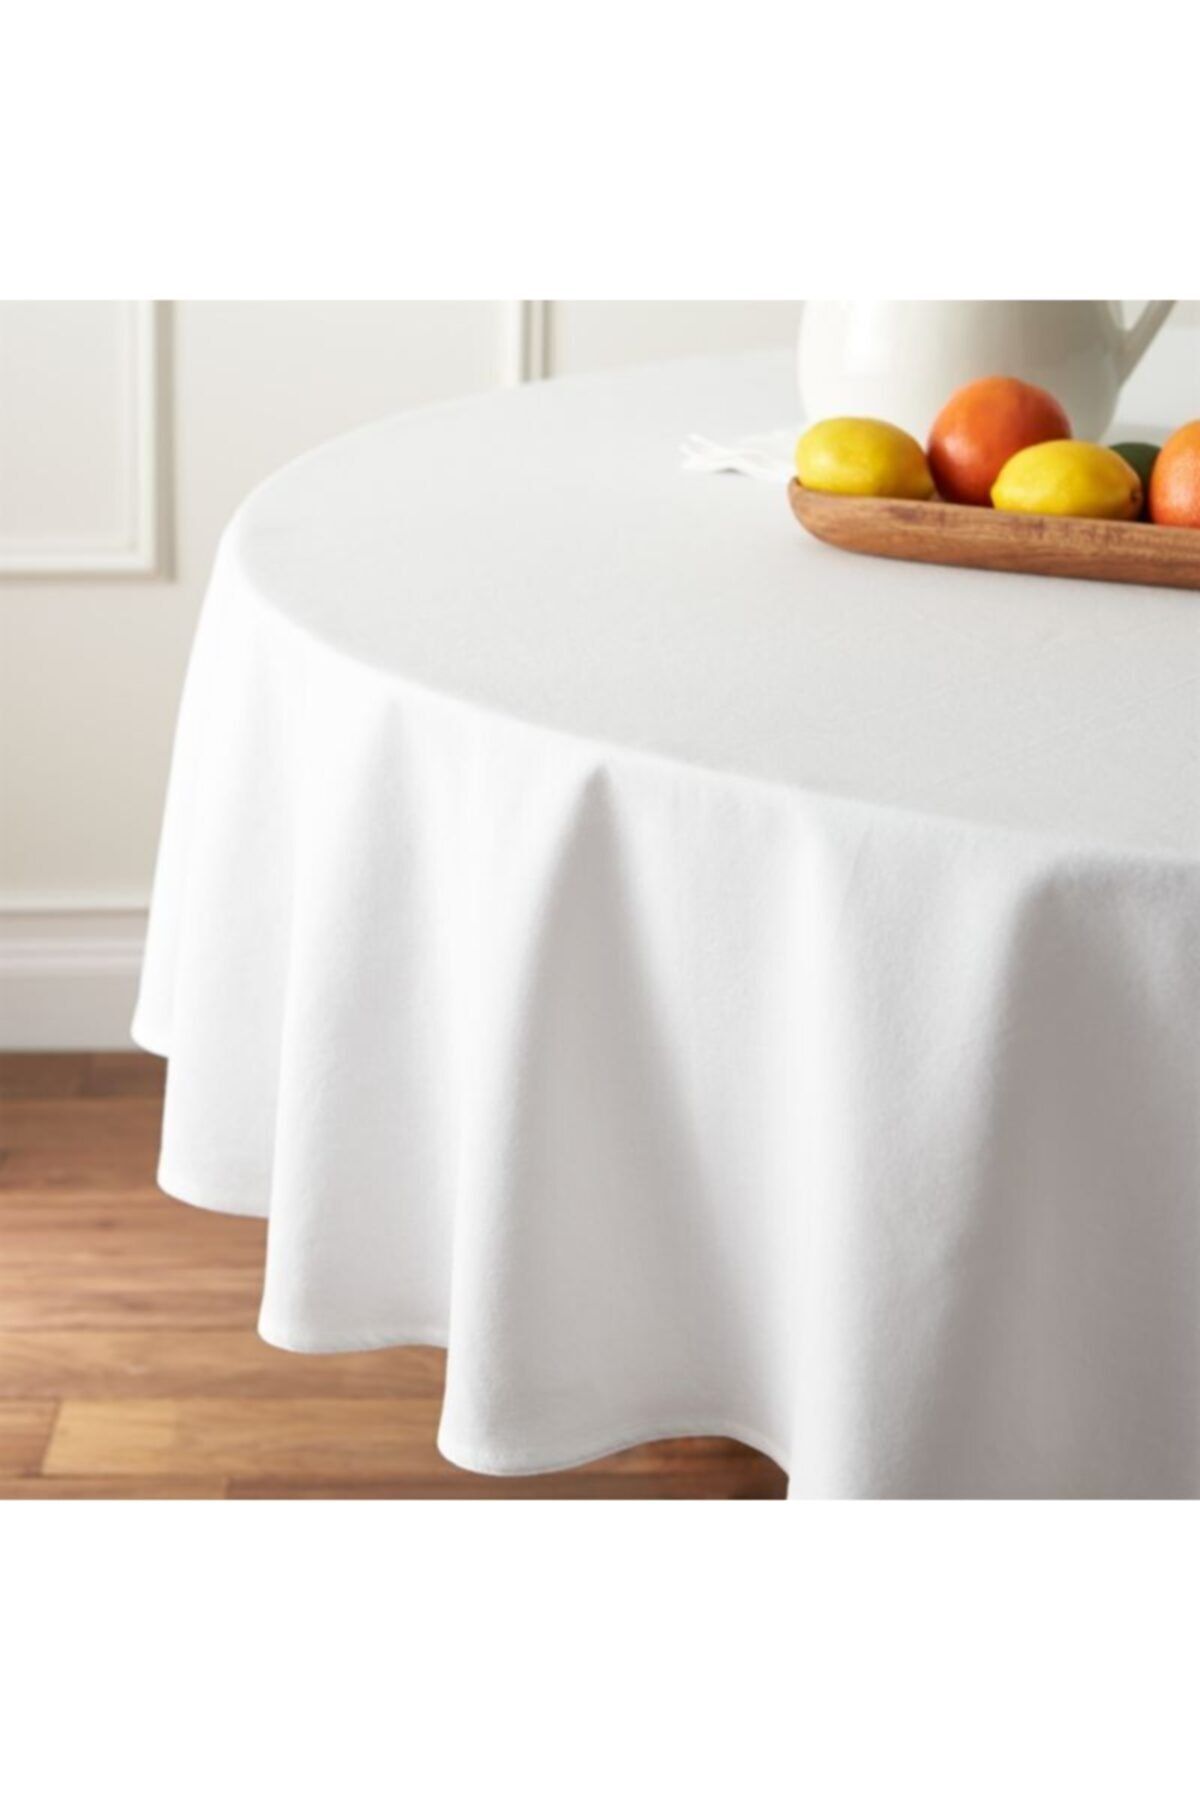 DORU CONCEPT Beyaz Masa Örtüsü Yuvarlak 180 Cm Çapında Duck Kumaş